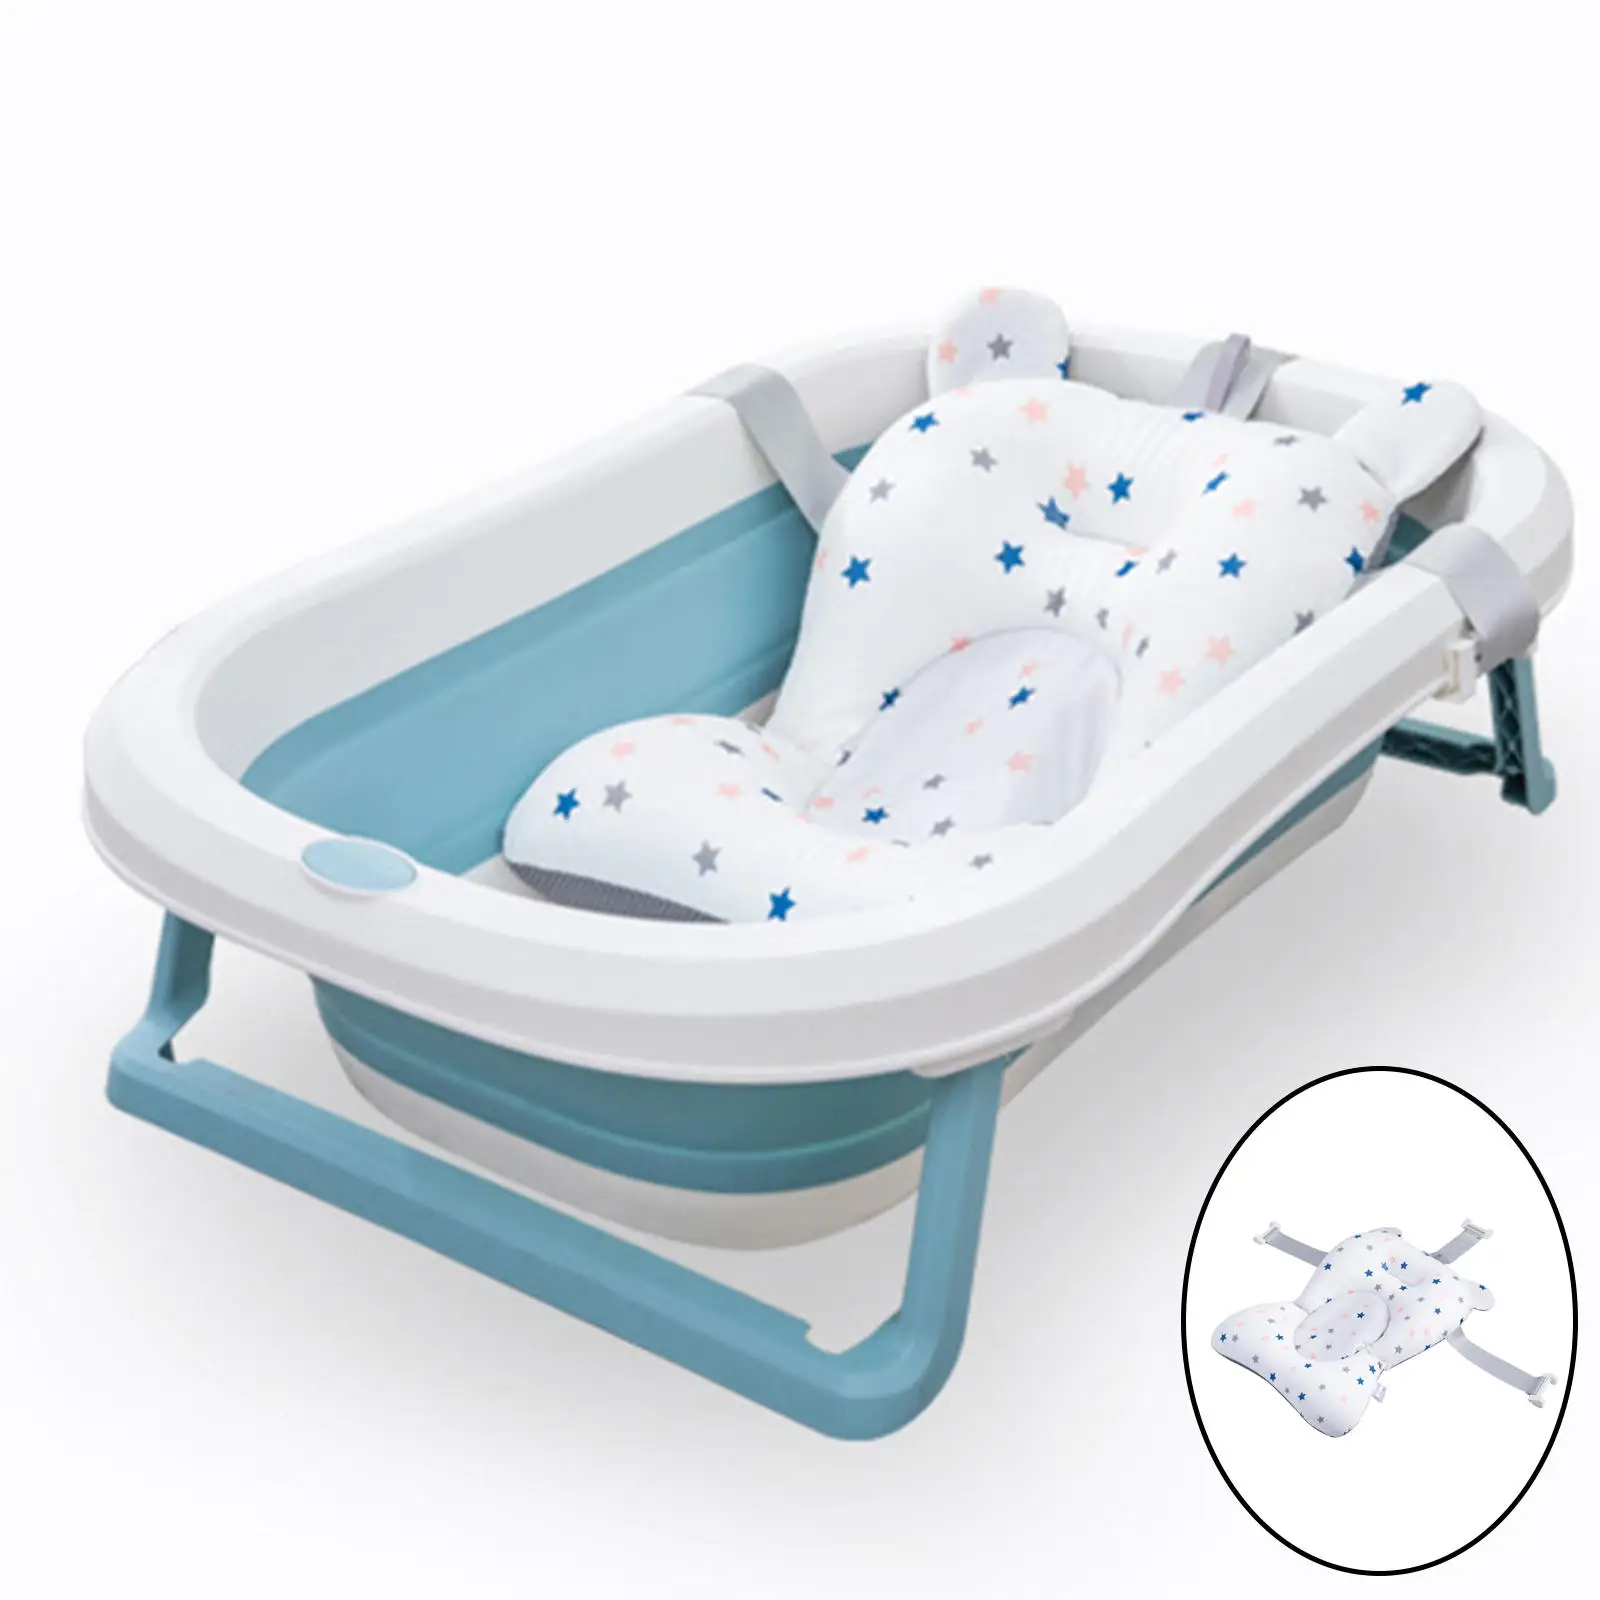 Baby Bath Pad Soft Comfortable Bath Support Seat Baby Bath Seat Support Mat Baby Bath Bed for 0-6 Months Babies Newborn Baby